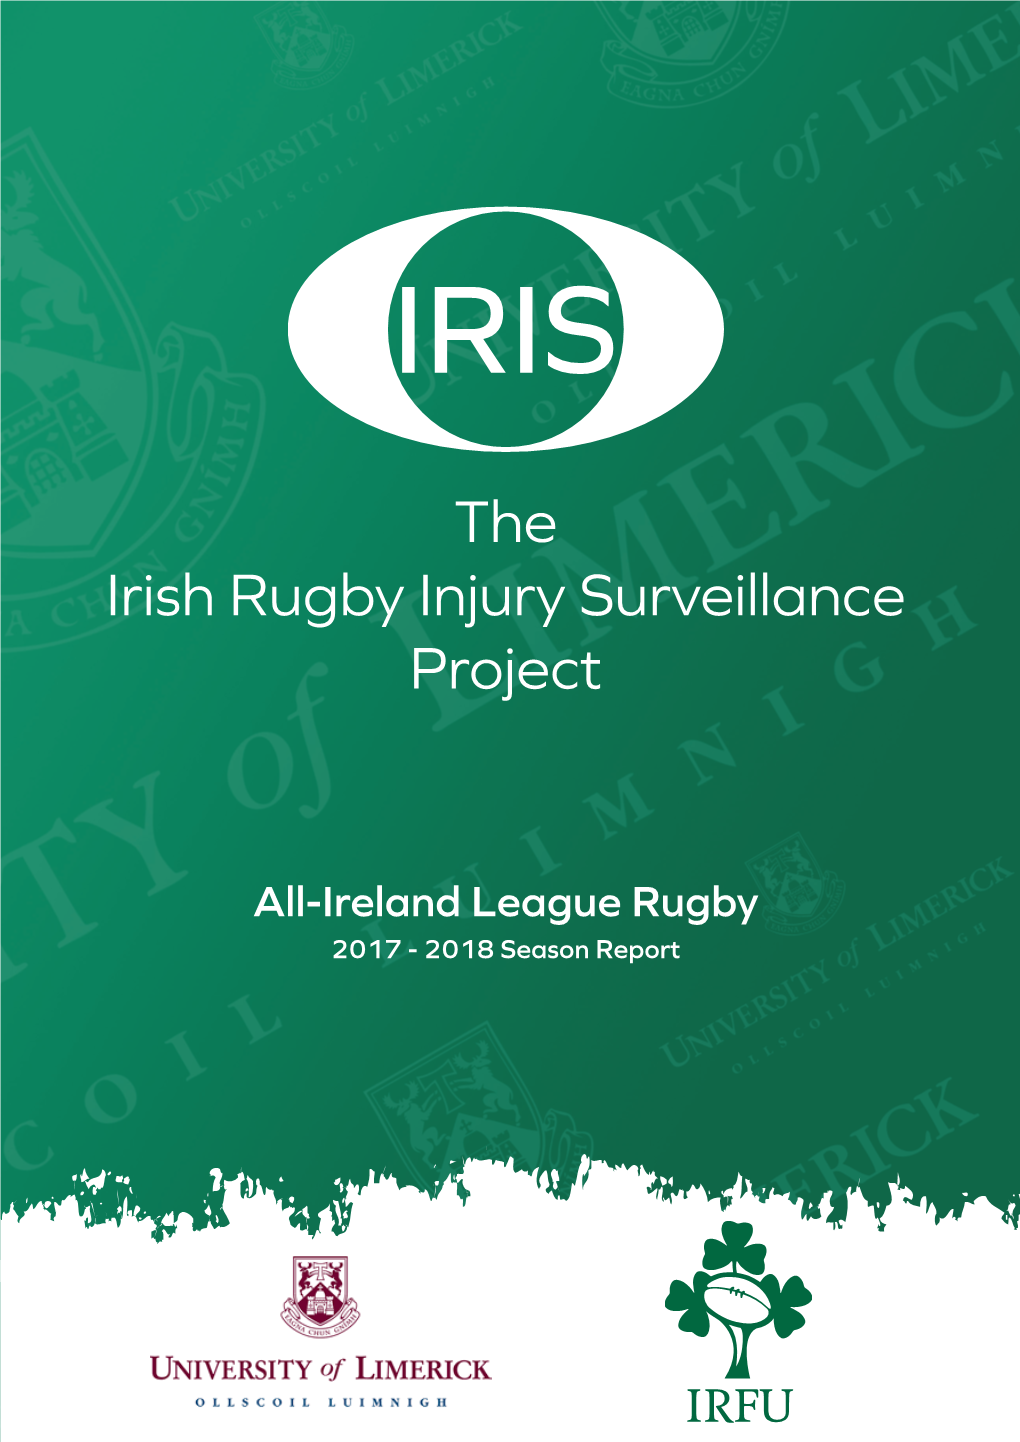 The Irish Rugby Injury Surveillance Project